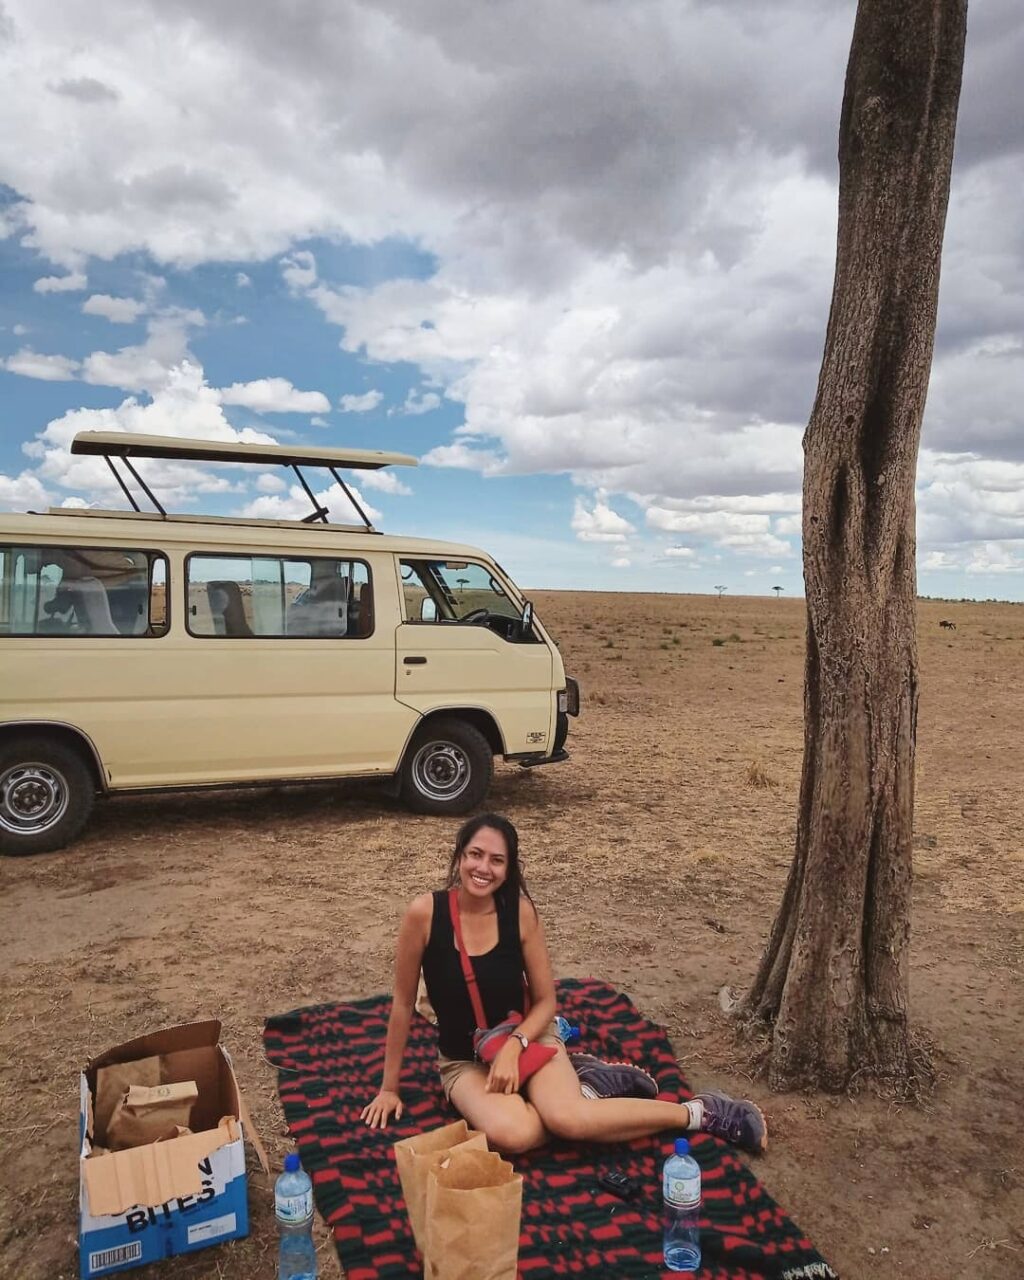 Masai Mara safari picnic | Ummi Goes Where?